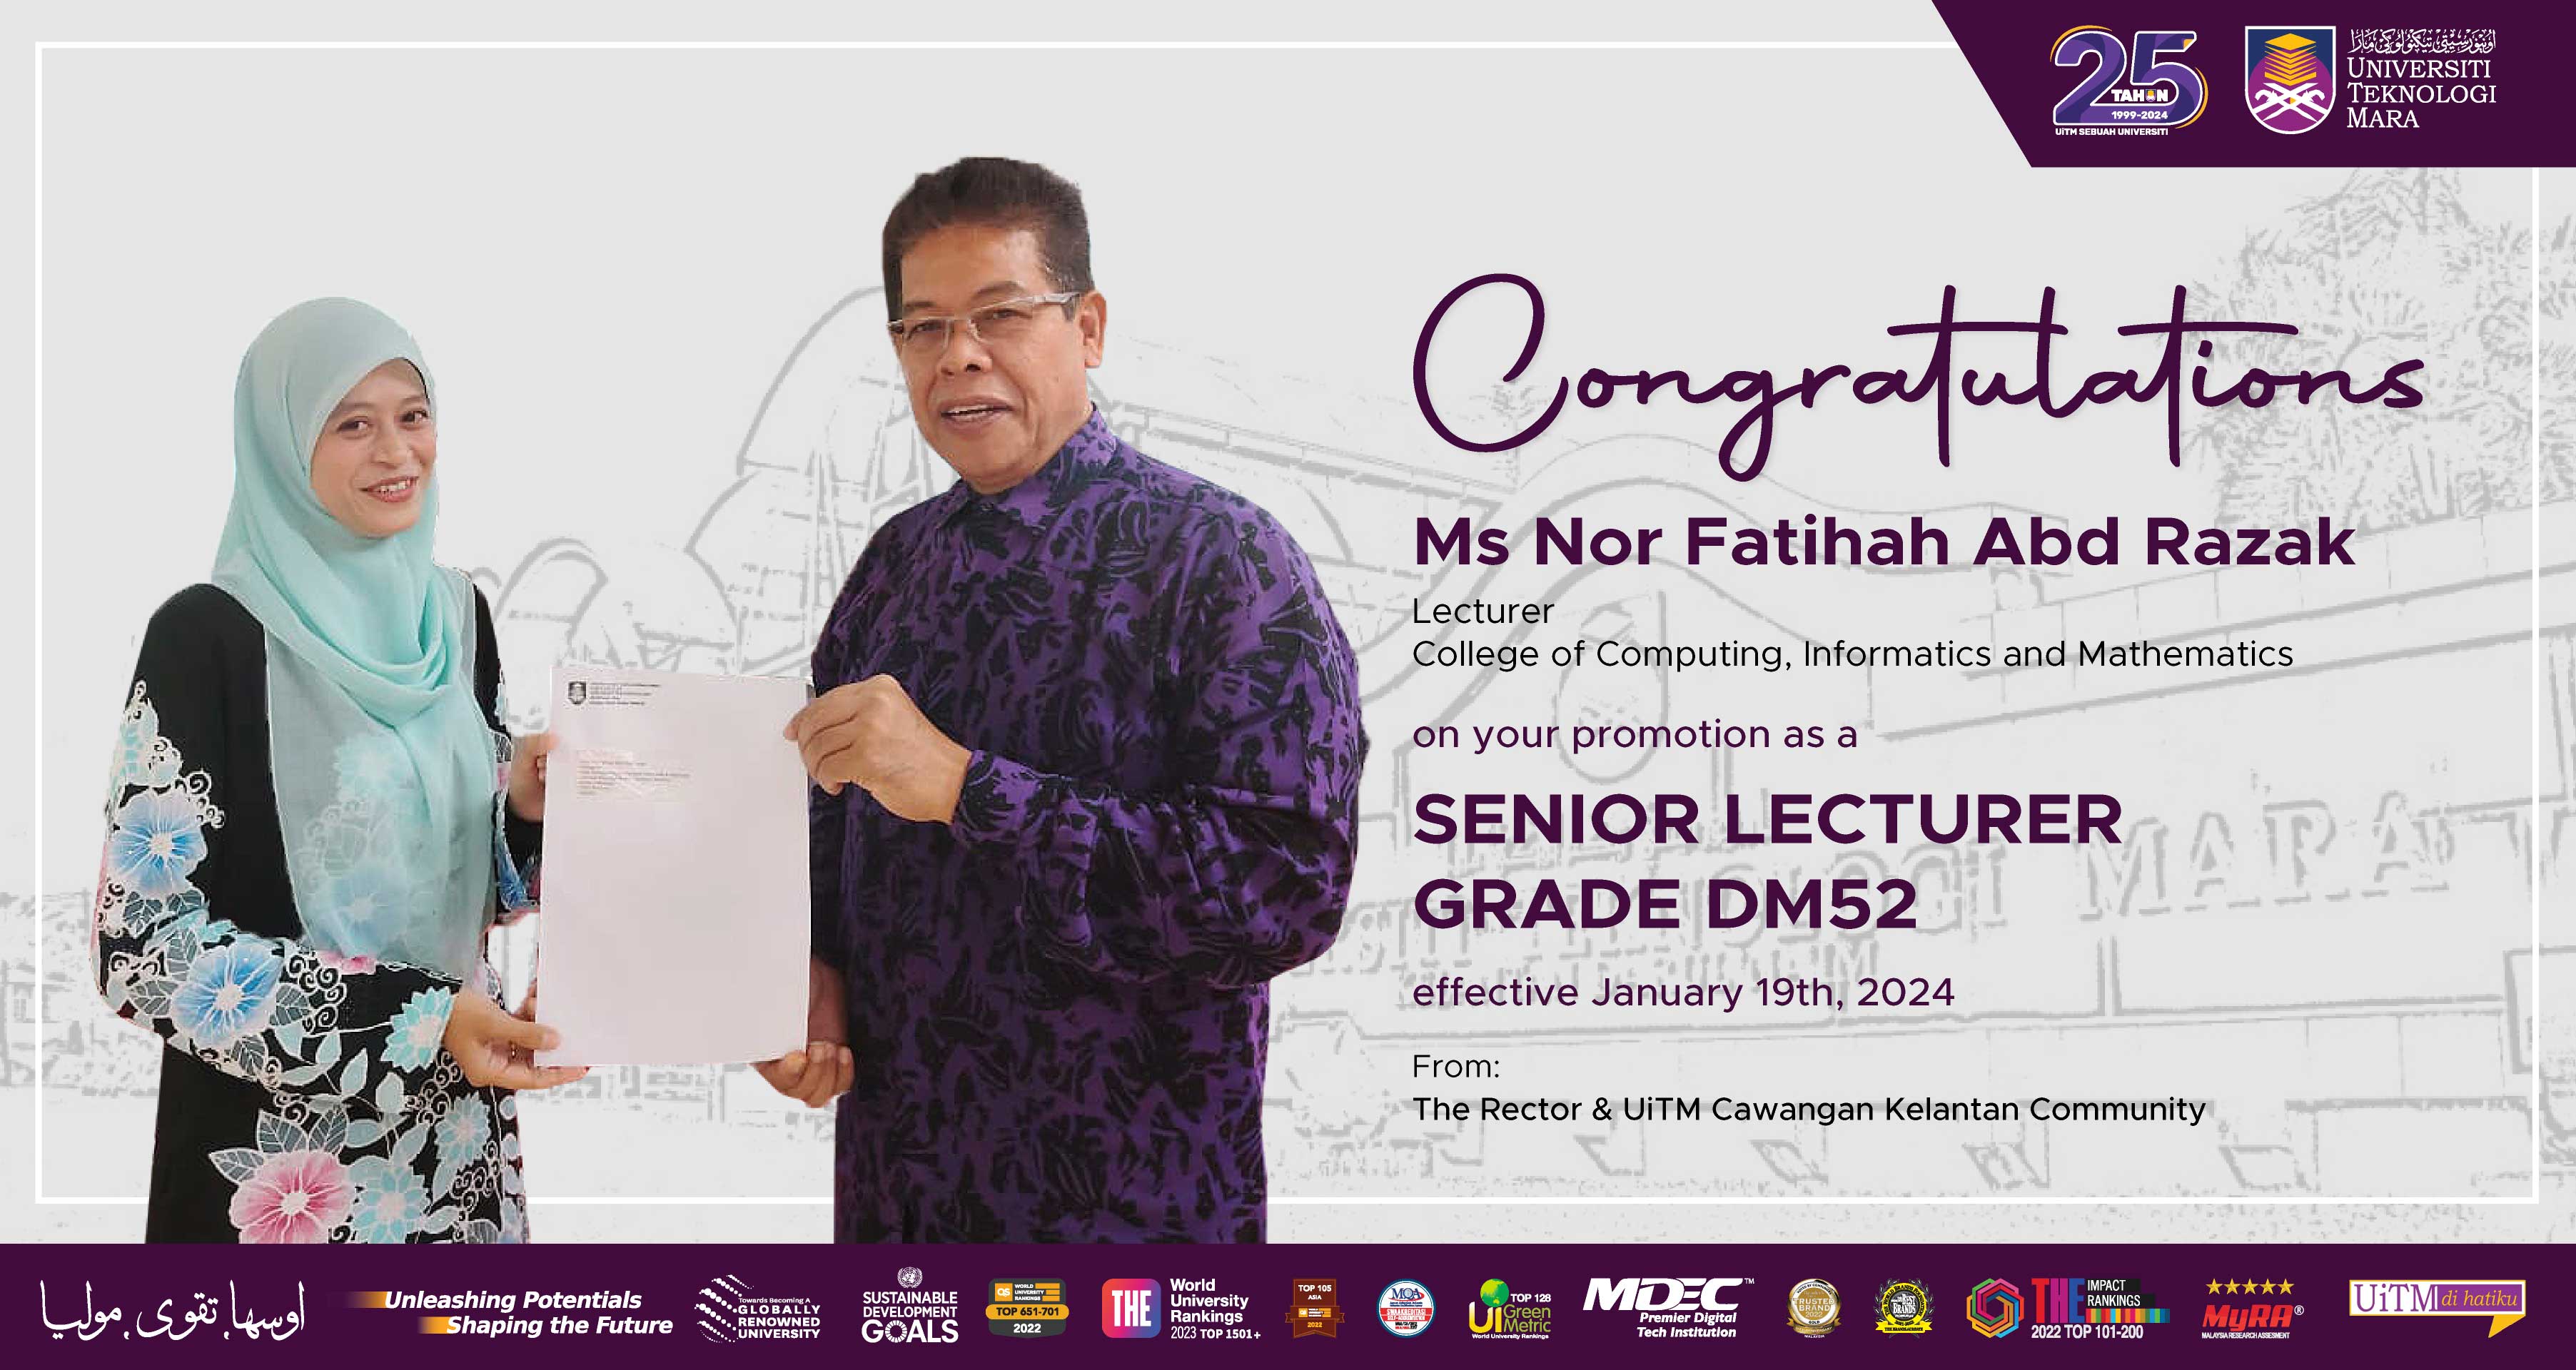 Congratulations!!! Ms Nor Fatihah Abd Razak, Senior Lecturer Grade DM52